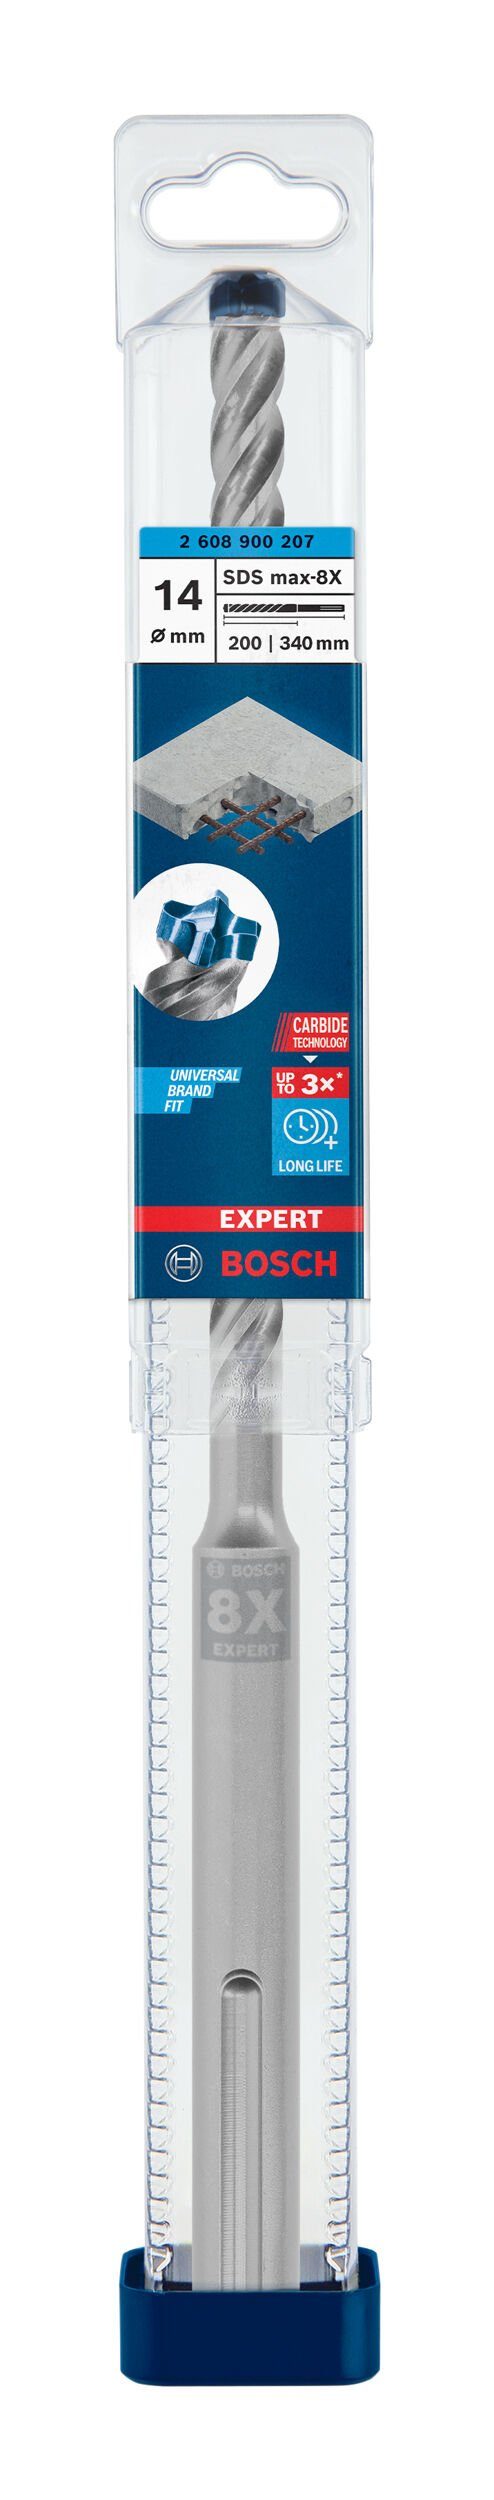 Expert BOSCH mm SDS x 200 max-8X, 14 Hammerbohrer - 340 Universalbohrer x